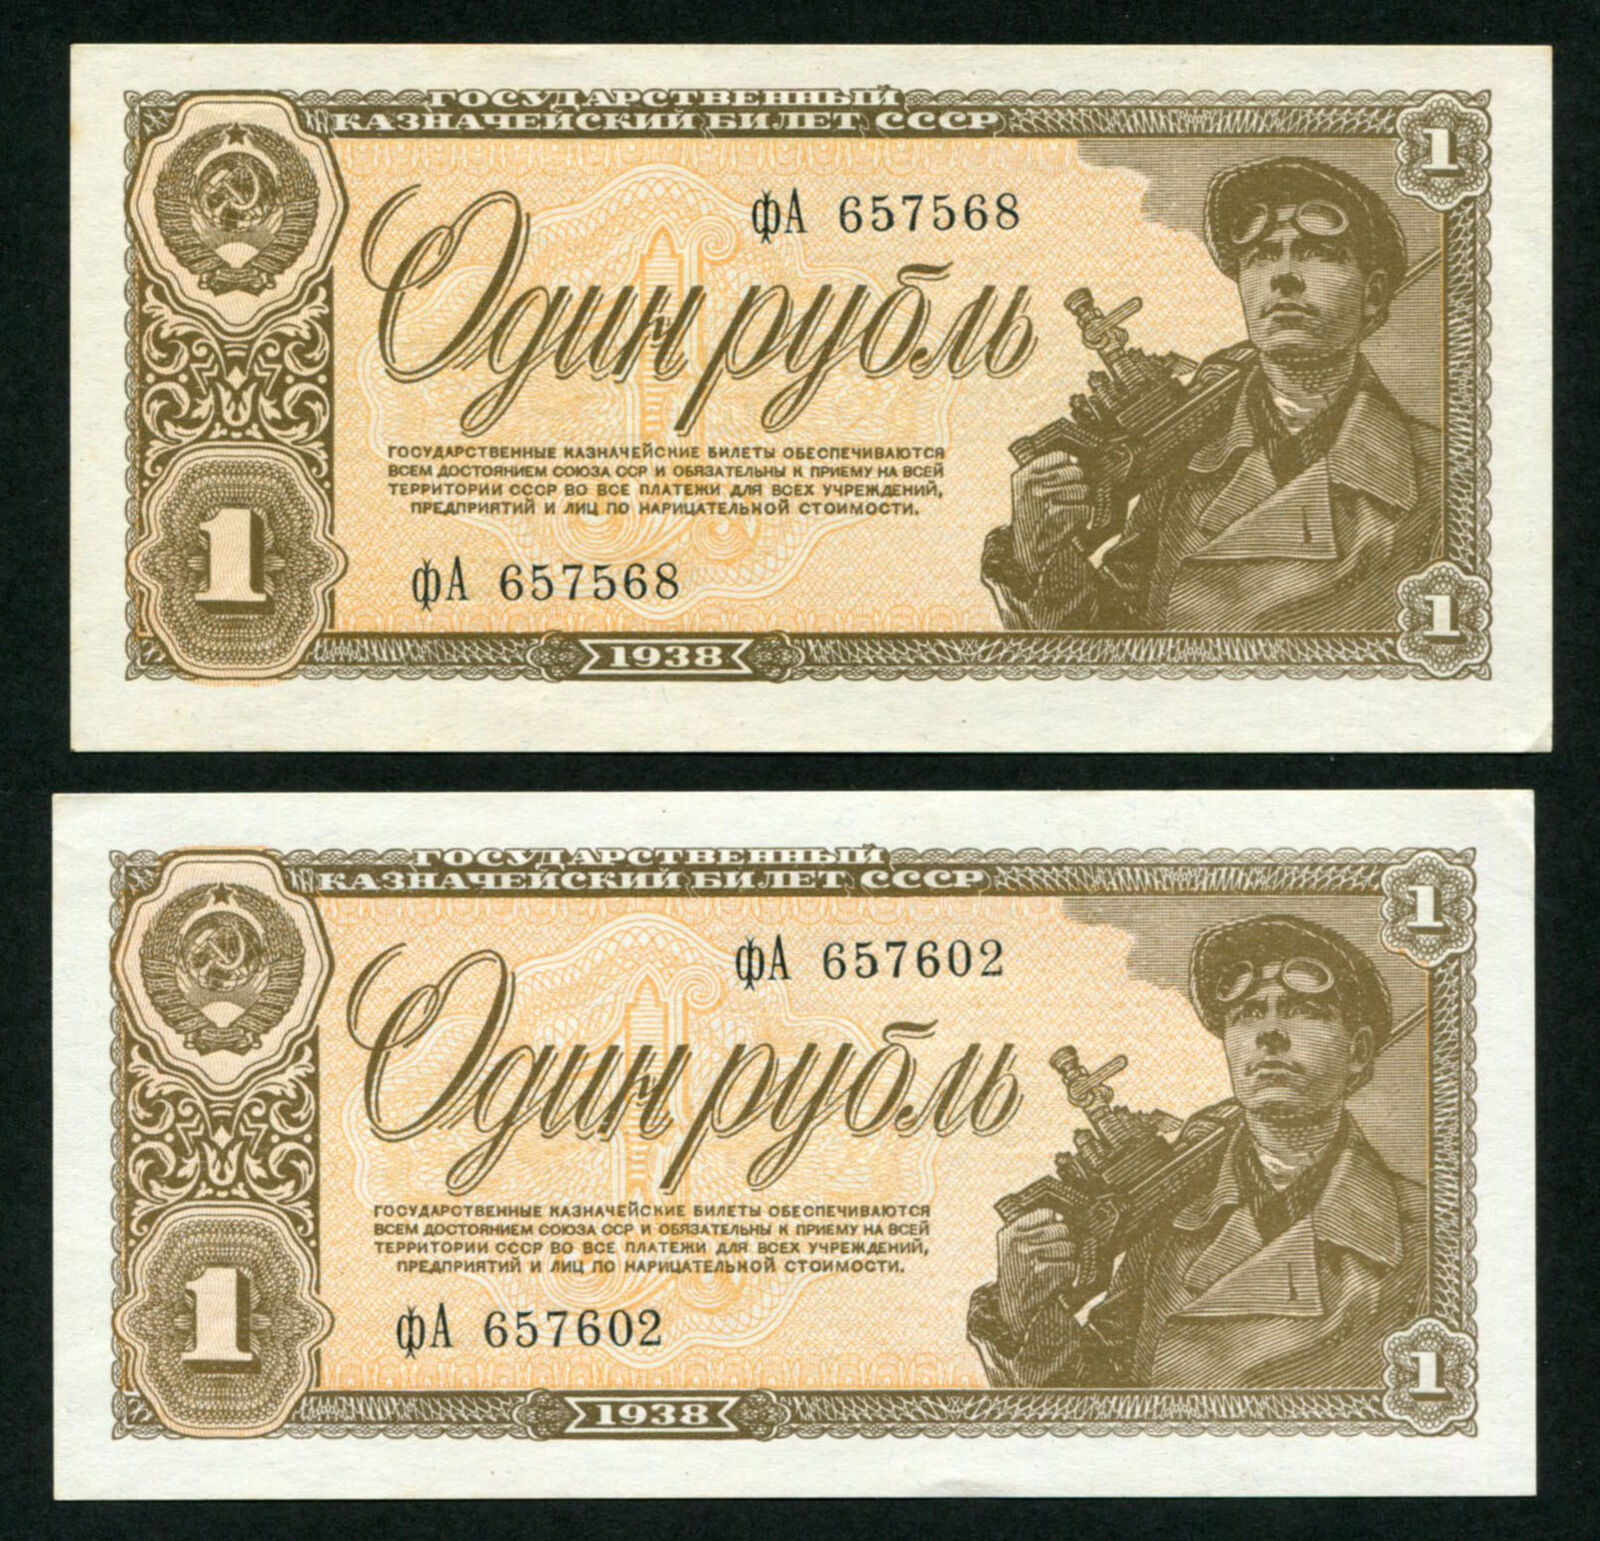 Russia 1 Ruble 1938, Pick 213, Set 2 banknotes, aUNC (2)